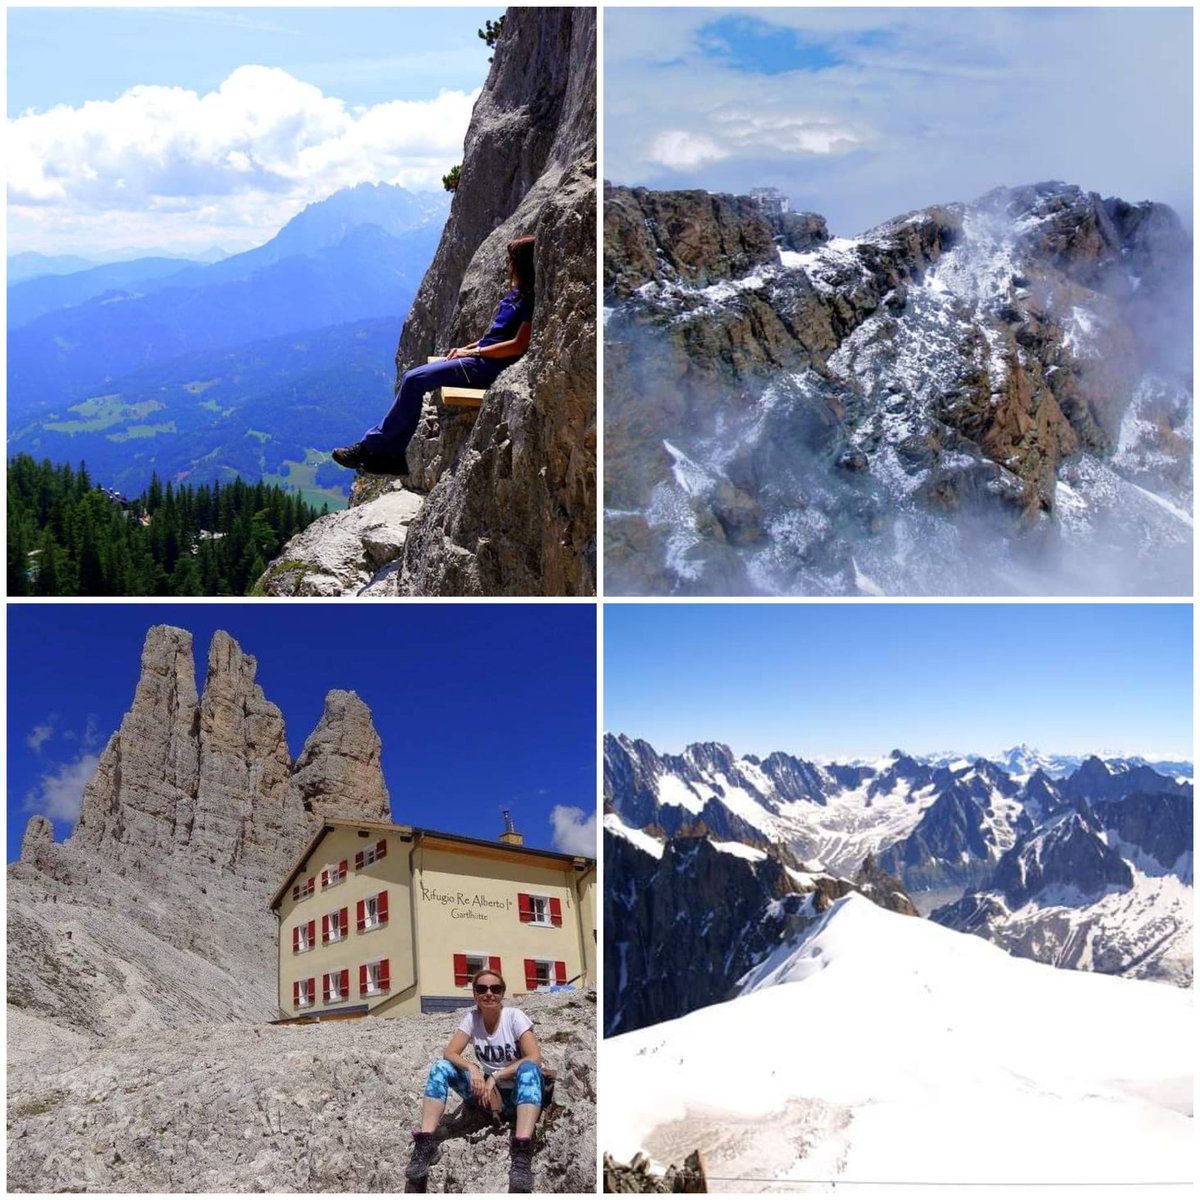 Hallo, @LiveaMemory
Topic close to my heart 💙
Here's mine #Top4Hikes!
1. #Tennengebirge #SalzburgAlps #Austria
2. #KleinMatterhorn #PennineAlps #Switzerland
3. #VajoletTowers #Dolomiti
#Italy
4. #AiguilleDuMidi #MontBlanc #France 
 @Touchse @Giselleinmotion @CharlesMcCool